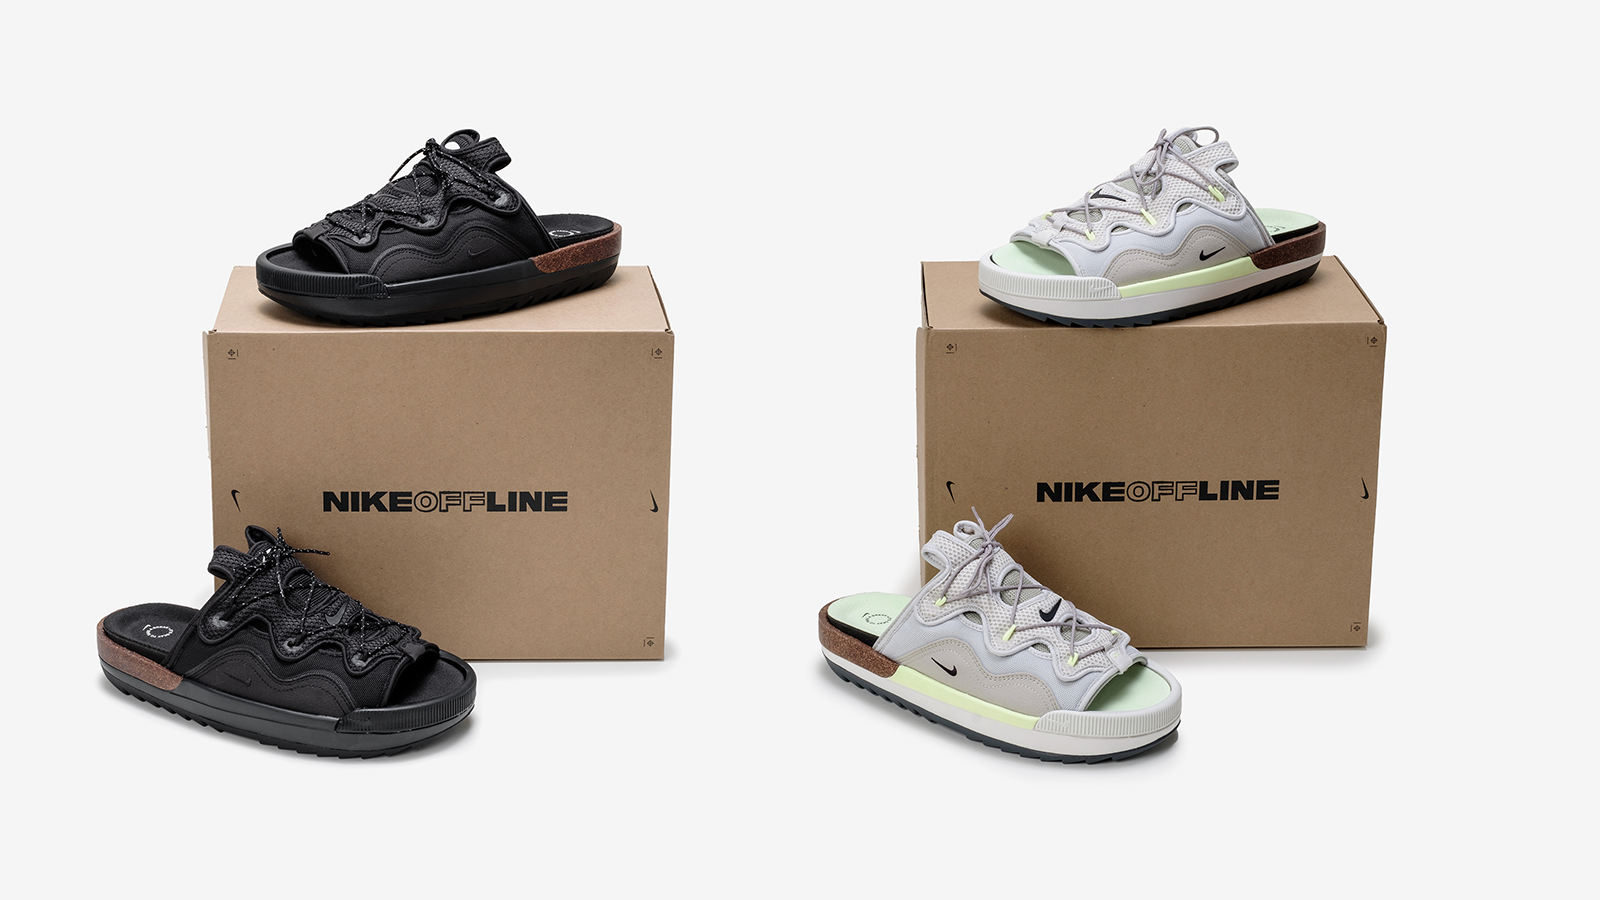 Nike offline 2.0